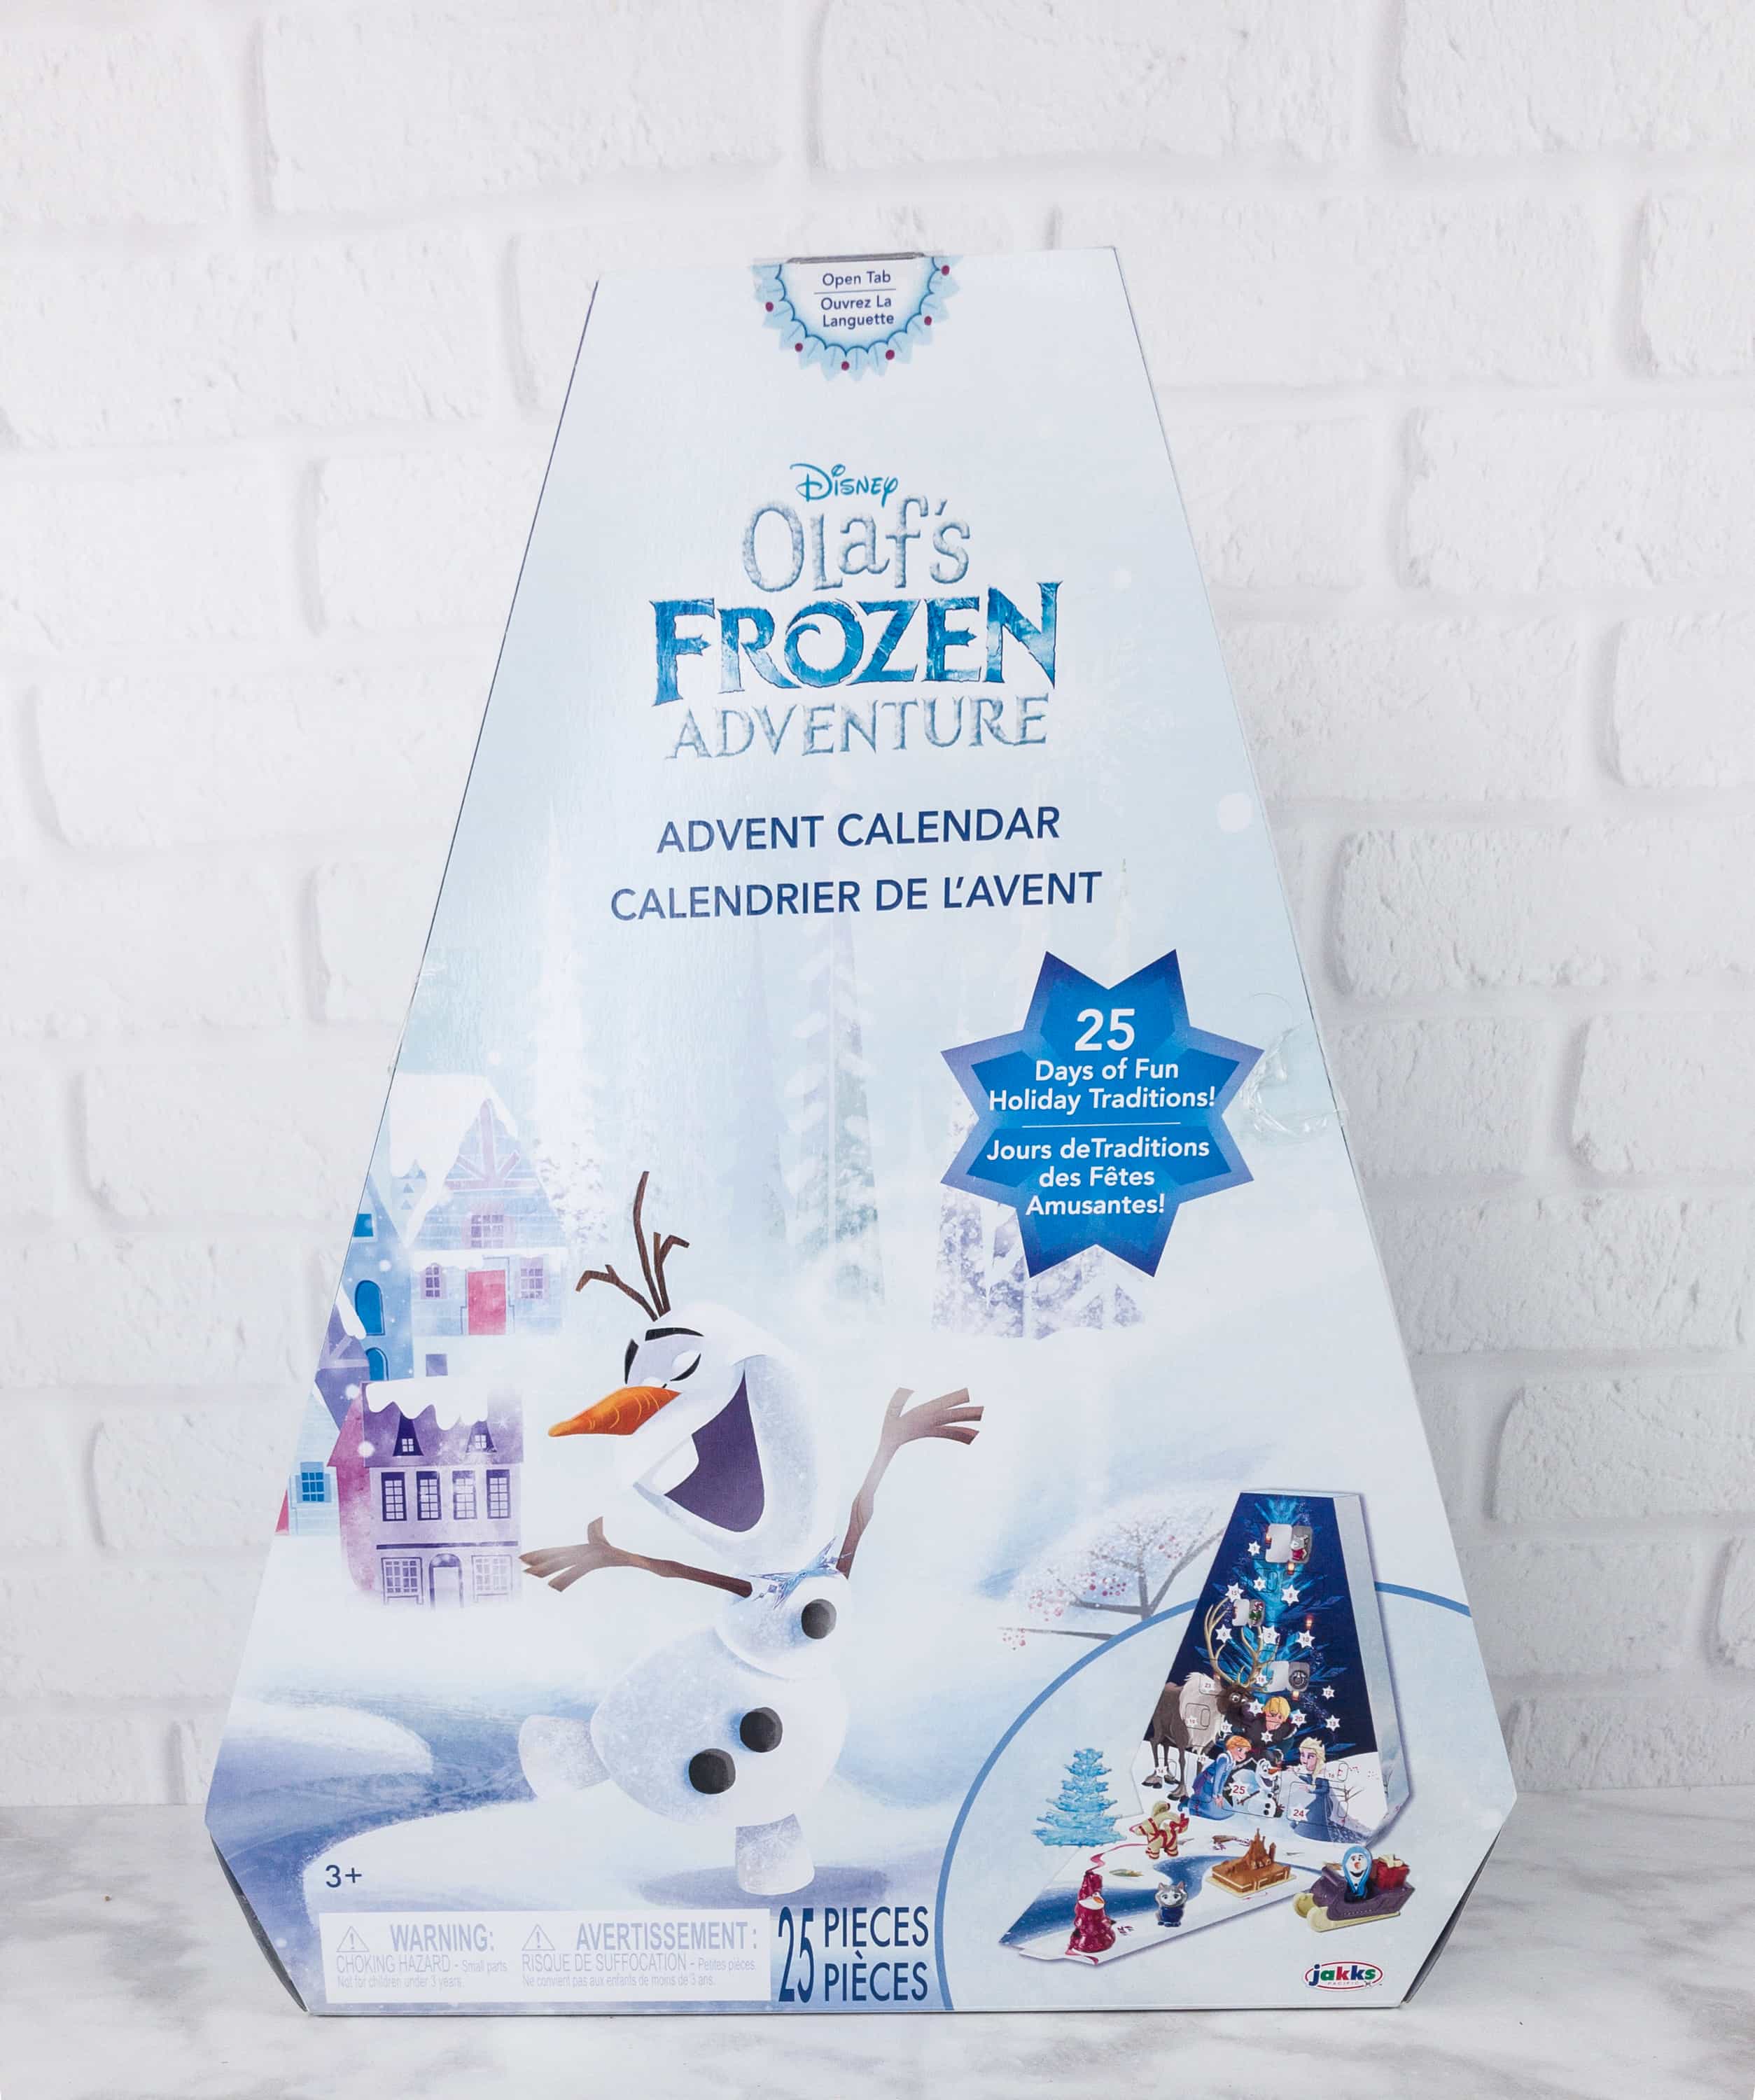 Disney Frozen Olaf Adventure 2017 Advent Calendar Mini Review Hello